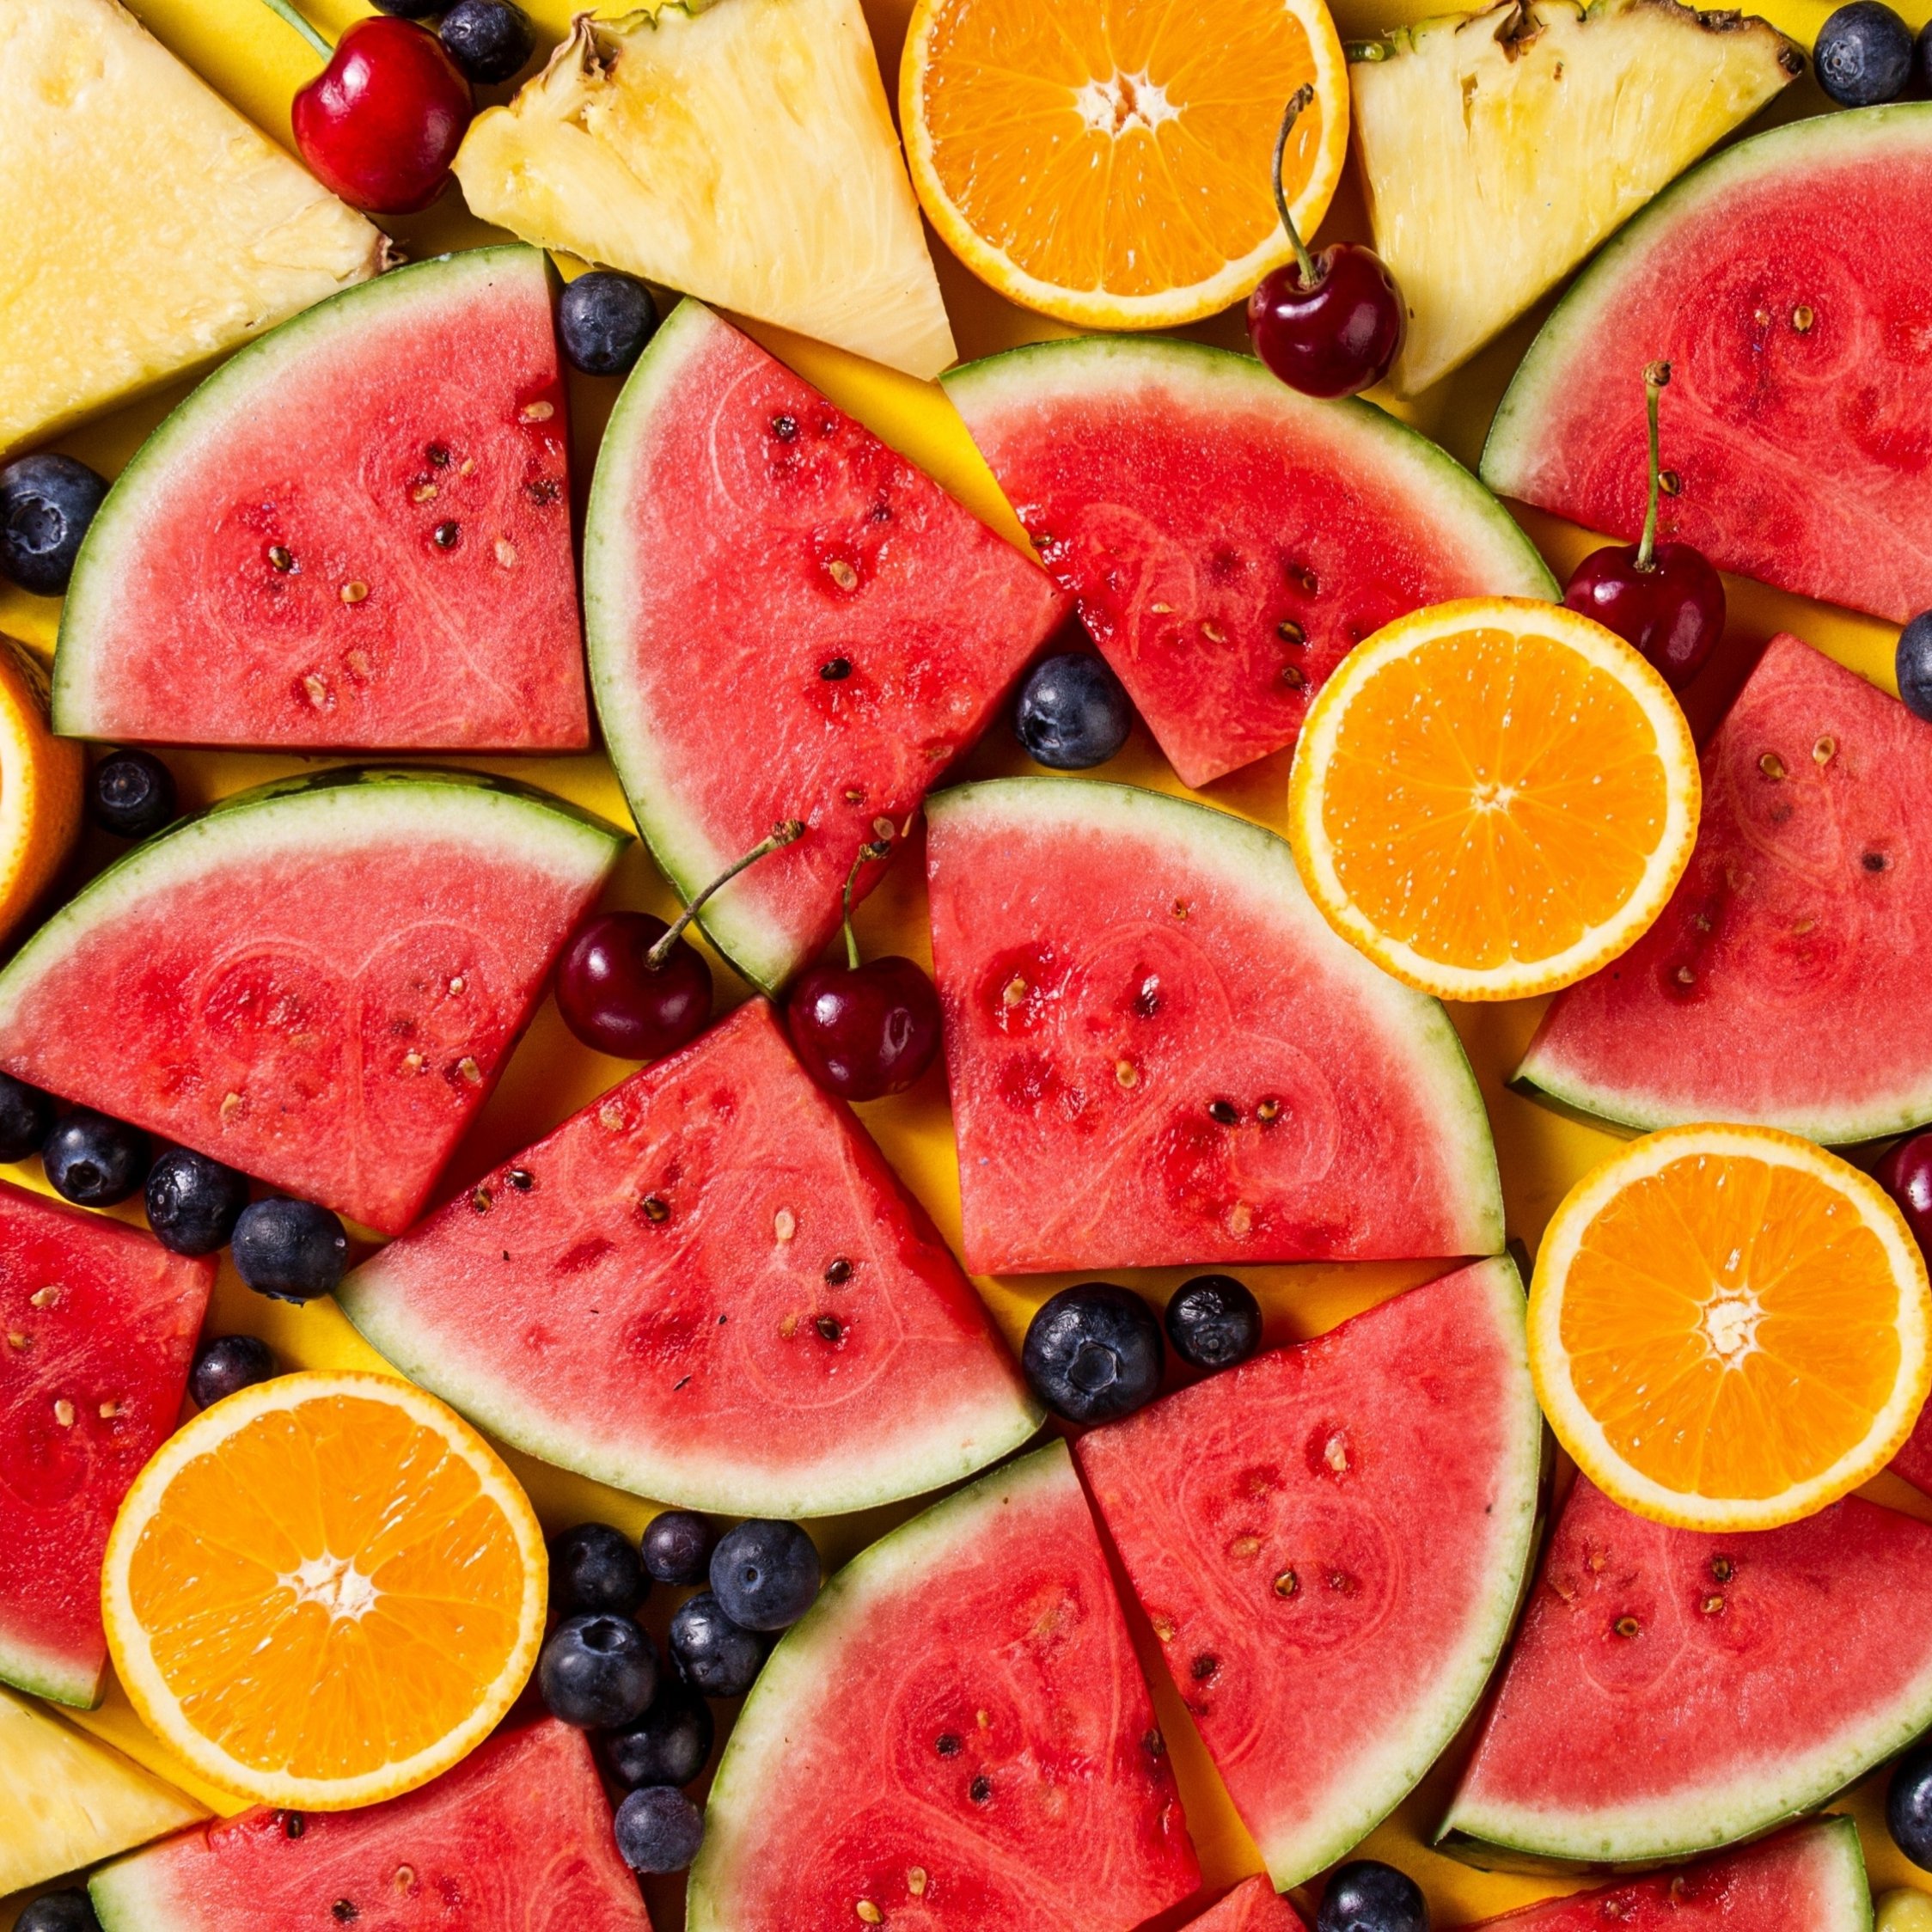 Download colorful fruits, berries, watermelon, summer 2248x2248 wallpaper, ipad air, ipad air ipad ipad ipad mini ipad mini 2248x2248 HD image, background, 24572